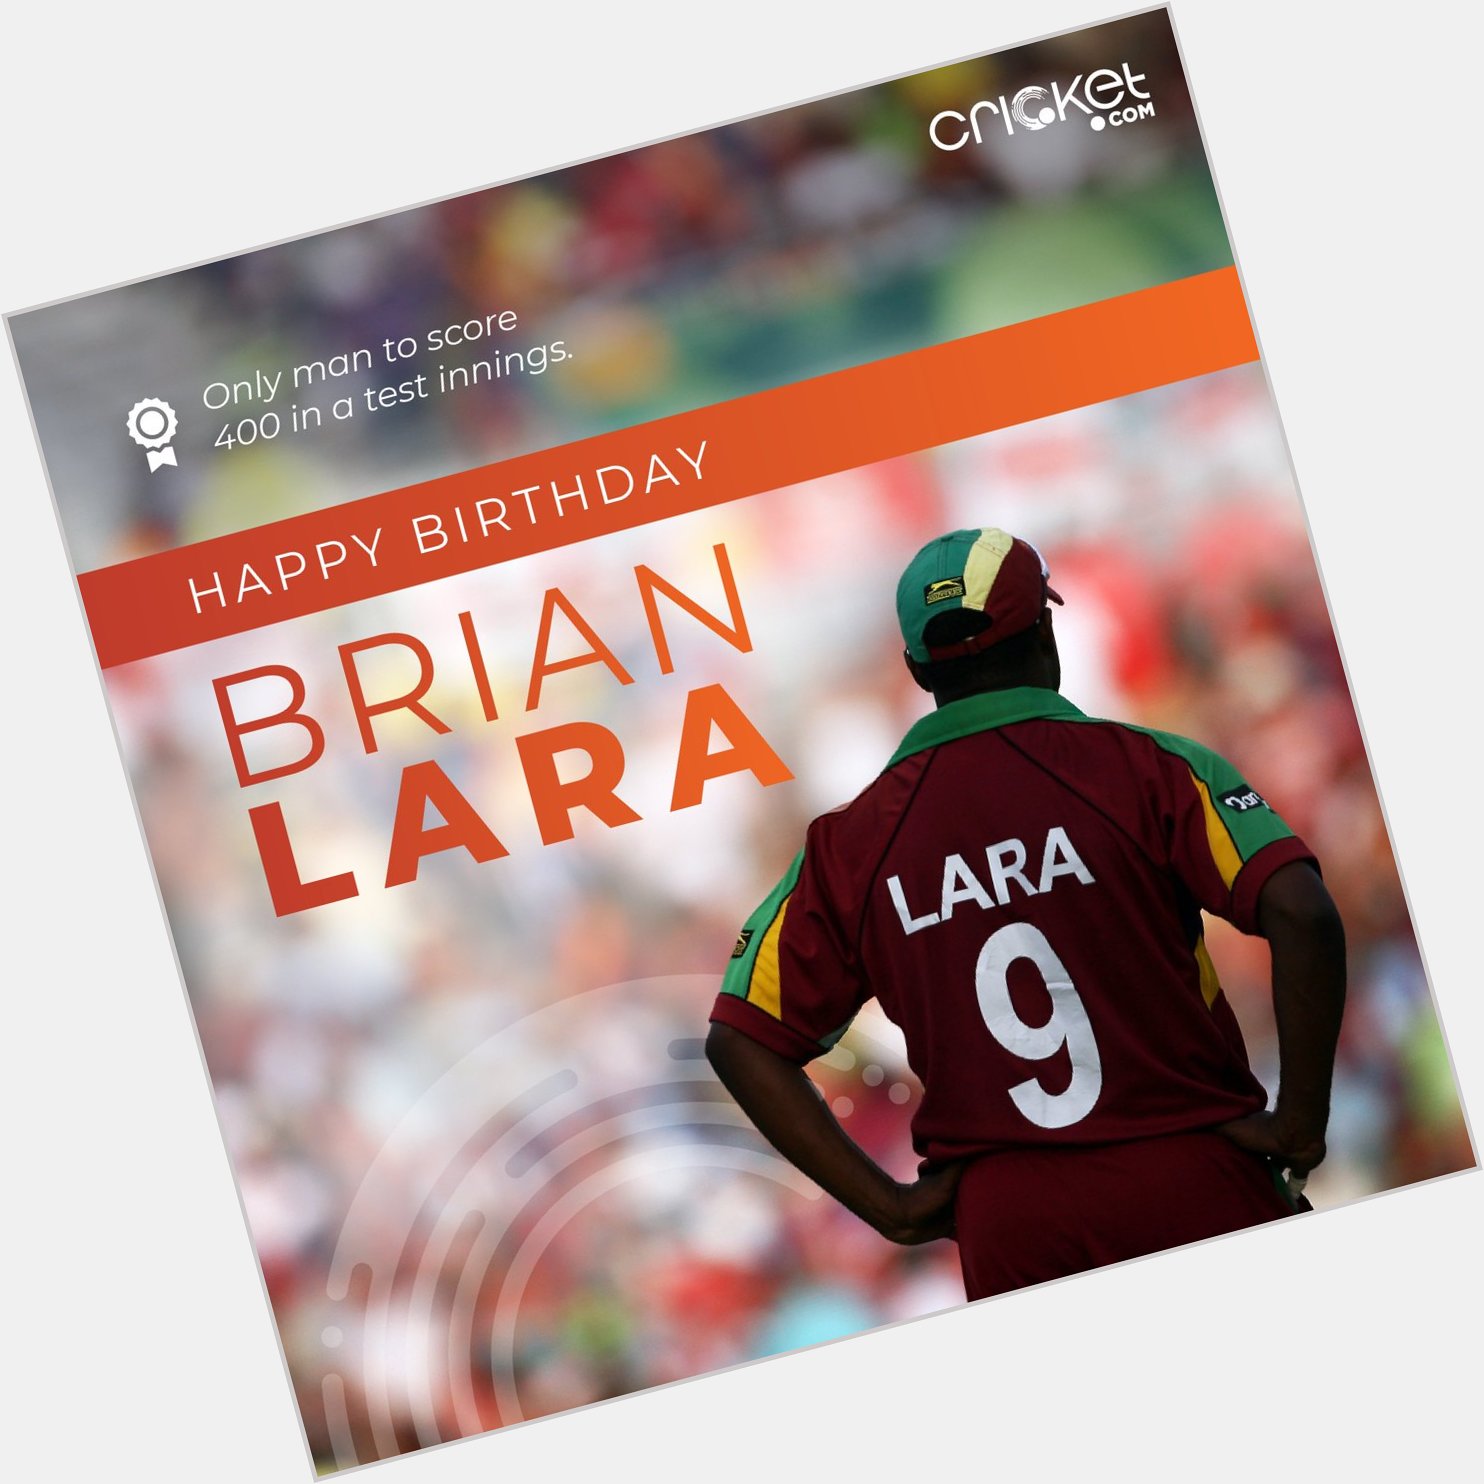 Happy Birthday Brian Lara.  